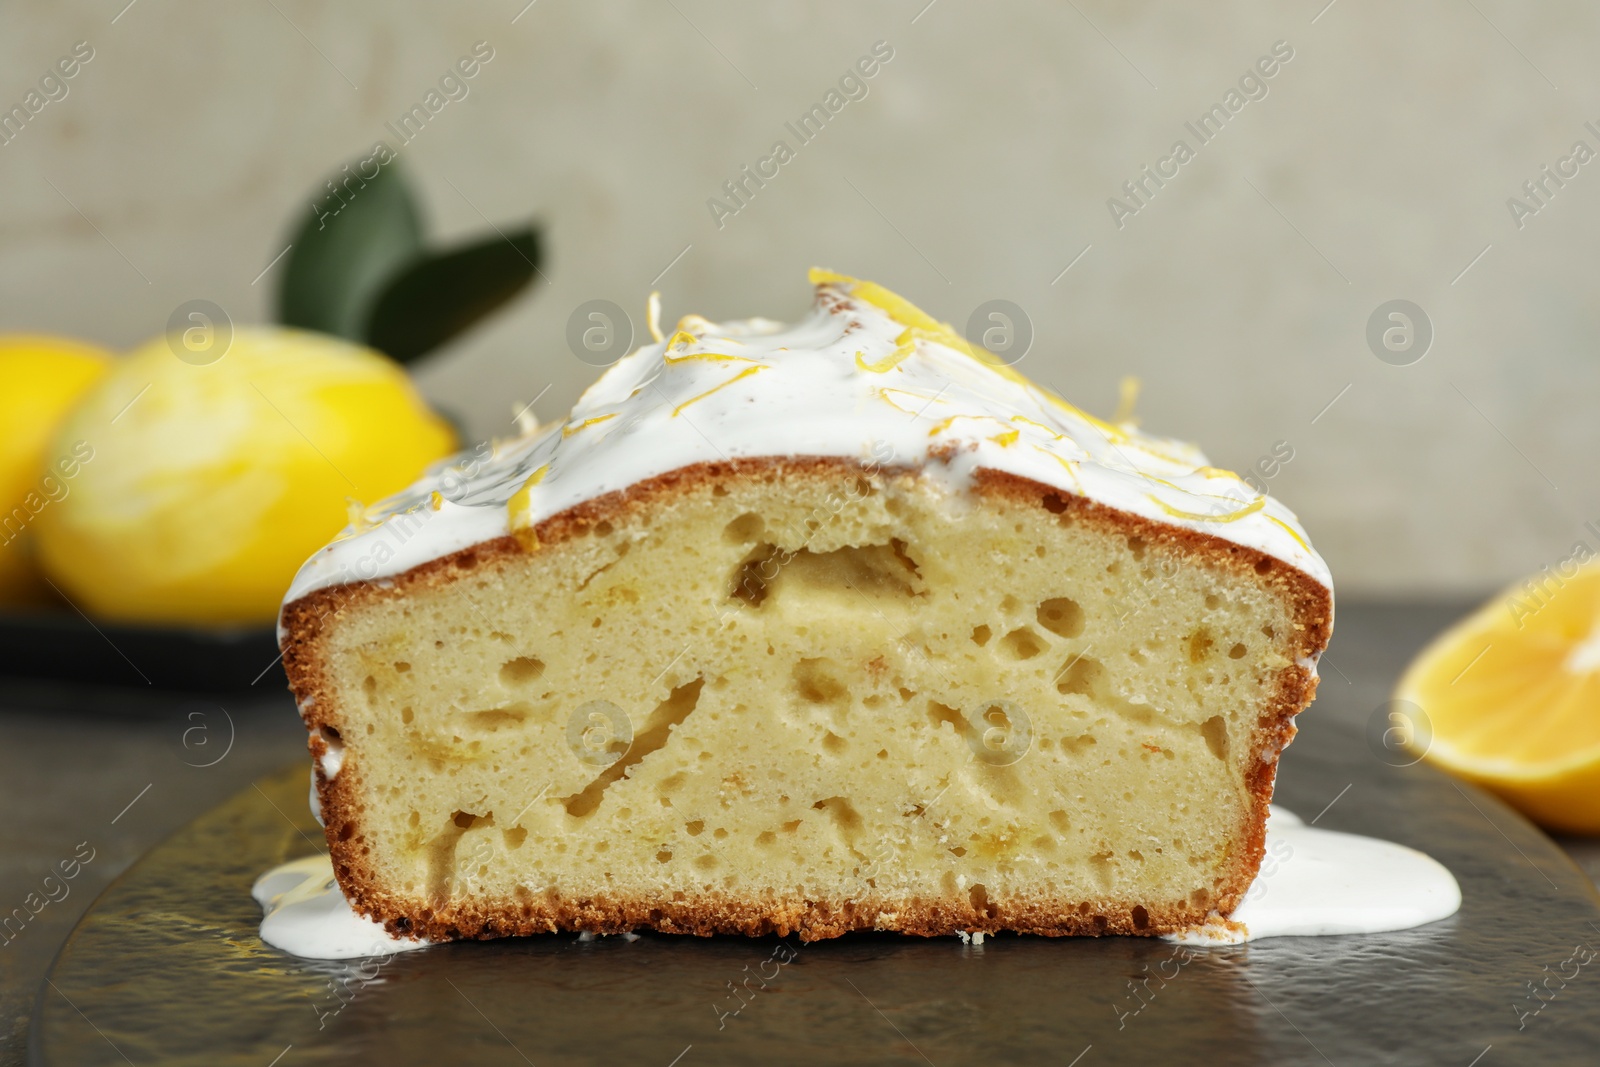 Photo of Tasty lemon cake with glaze on table, closeup